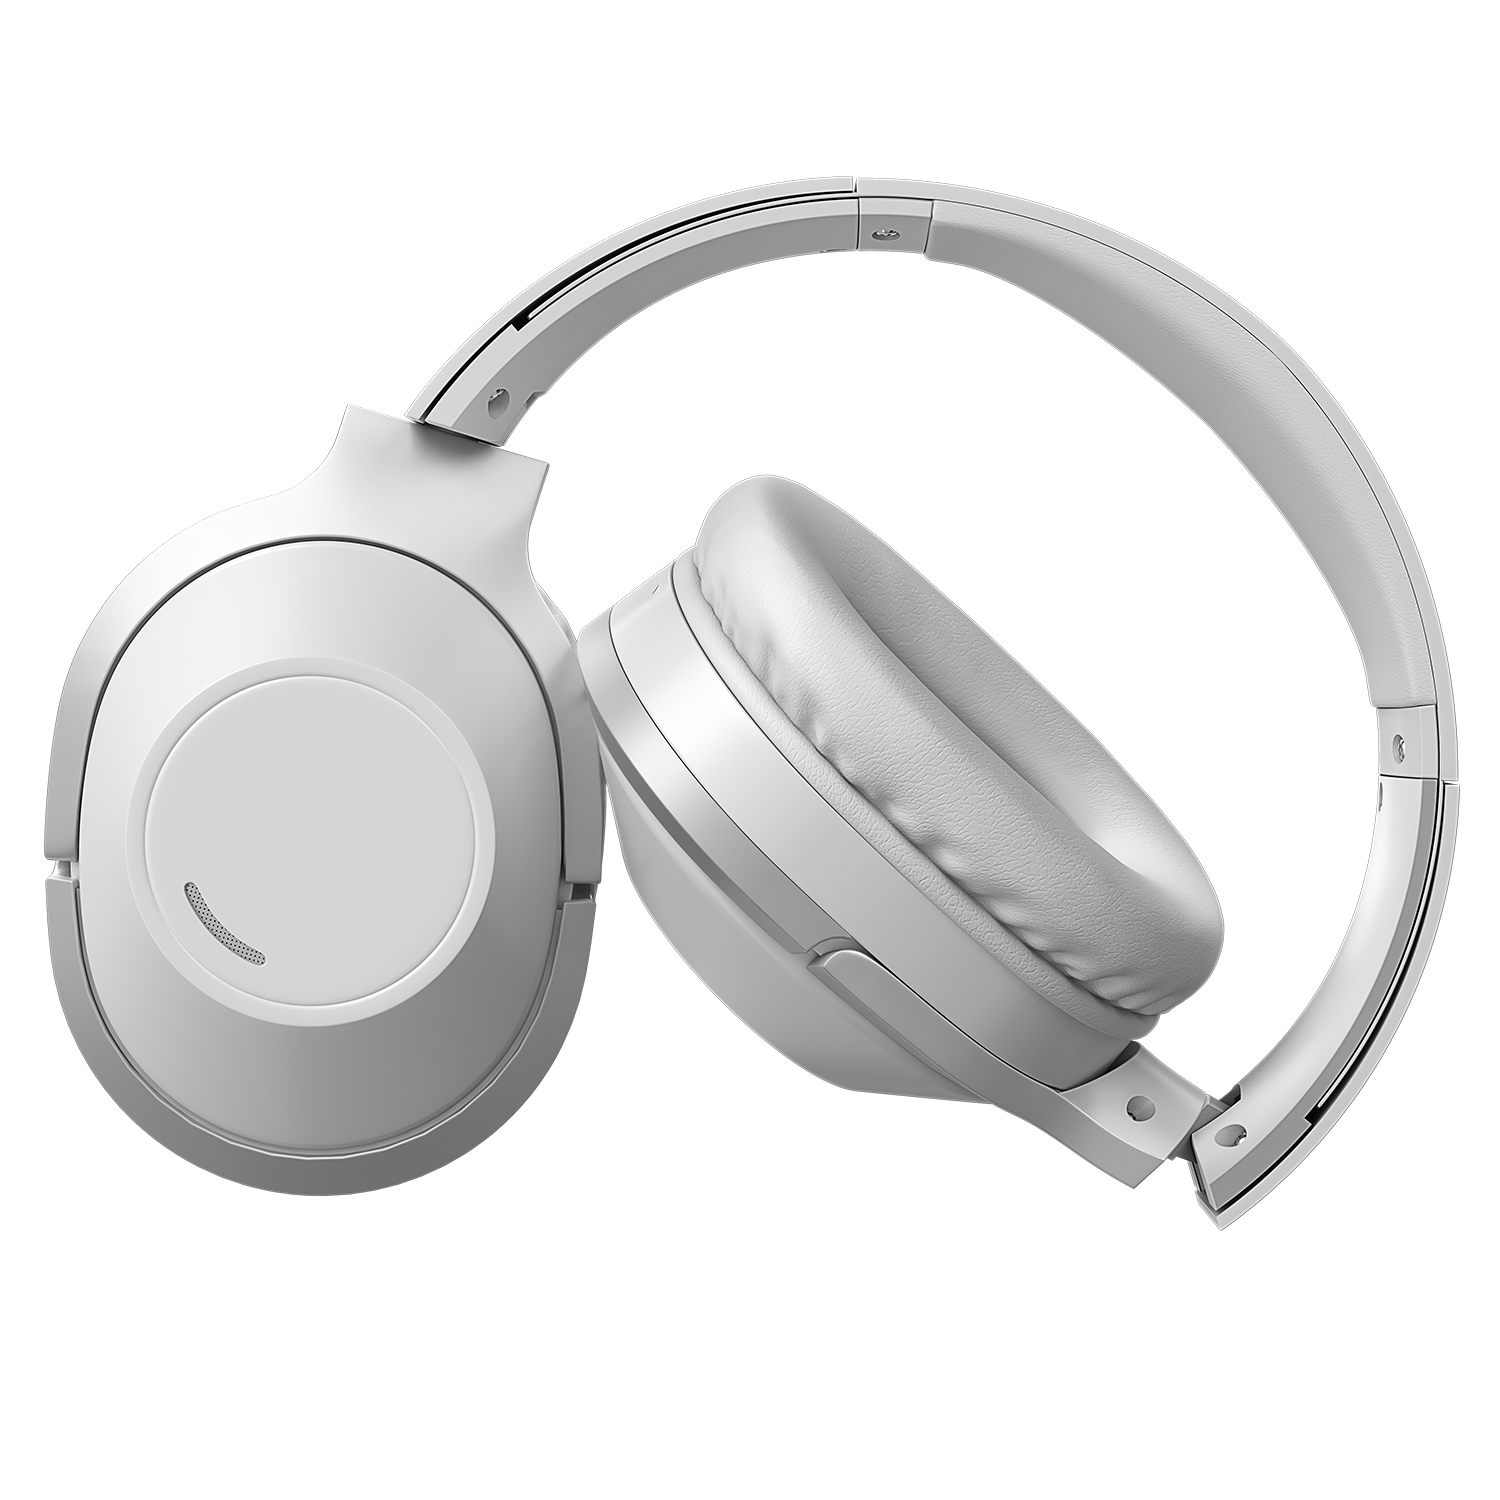 WIREFREE Over-Ear Headphones